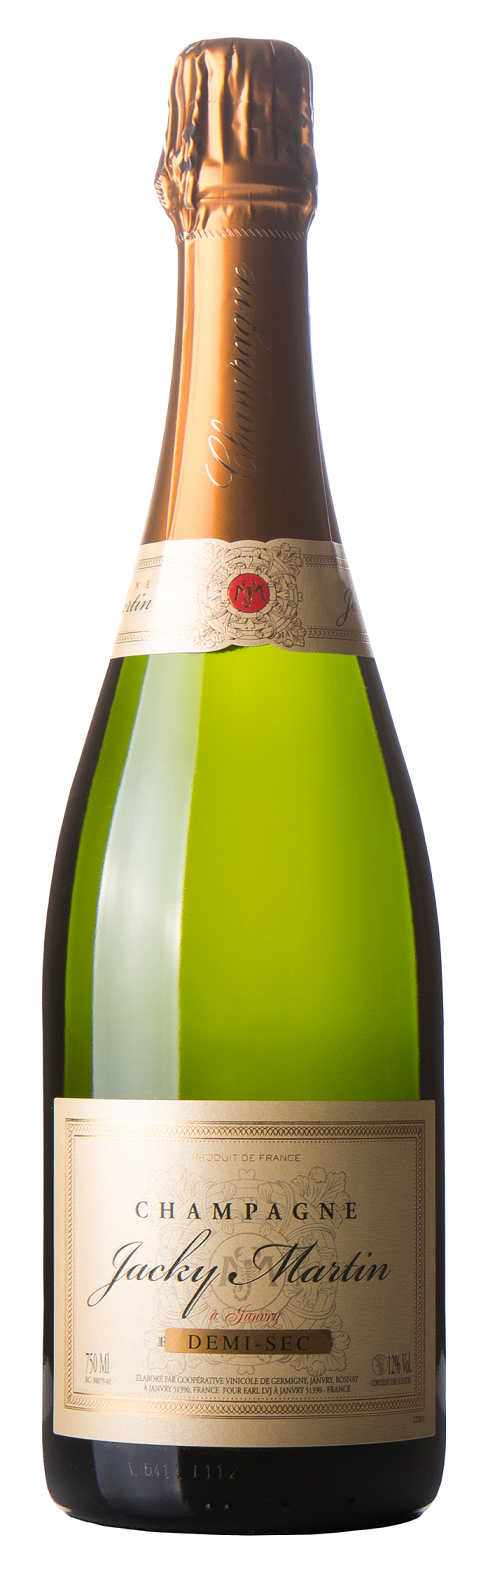 Champagne Jacky Martin Demi-Sec